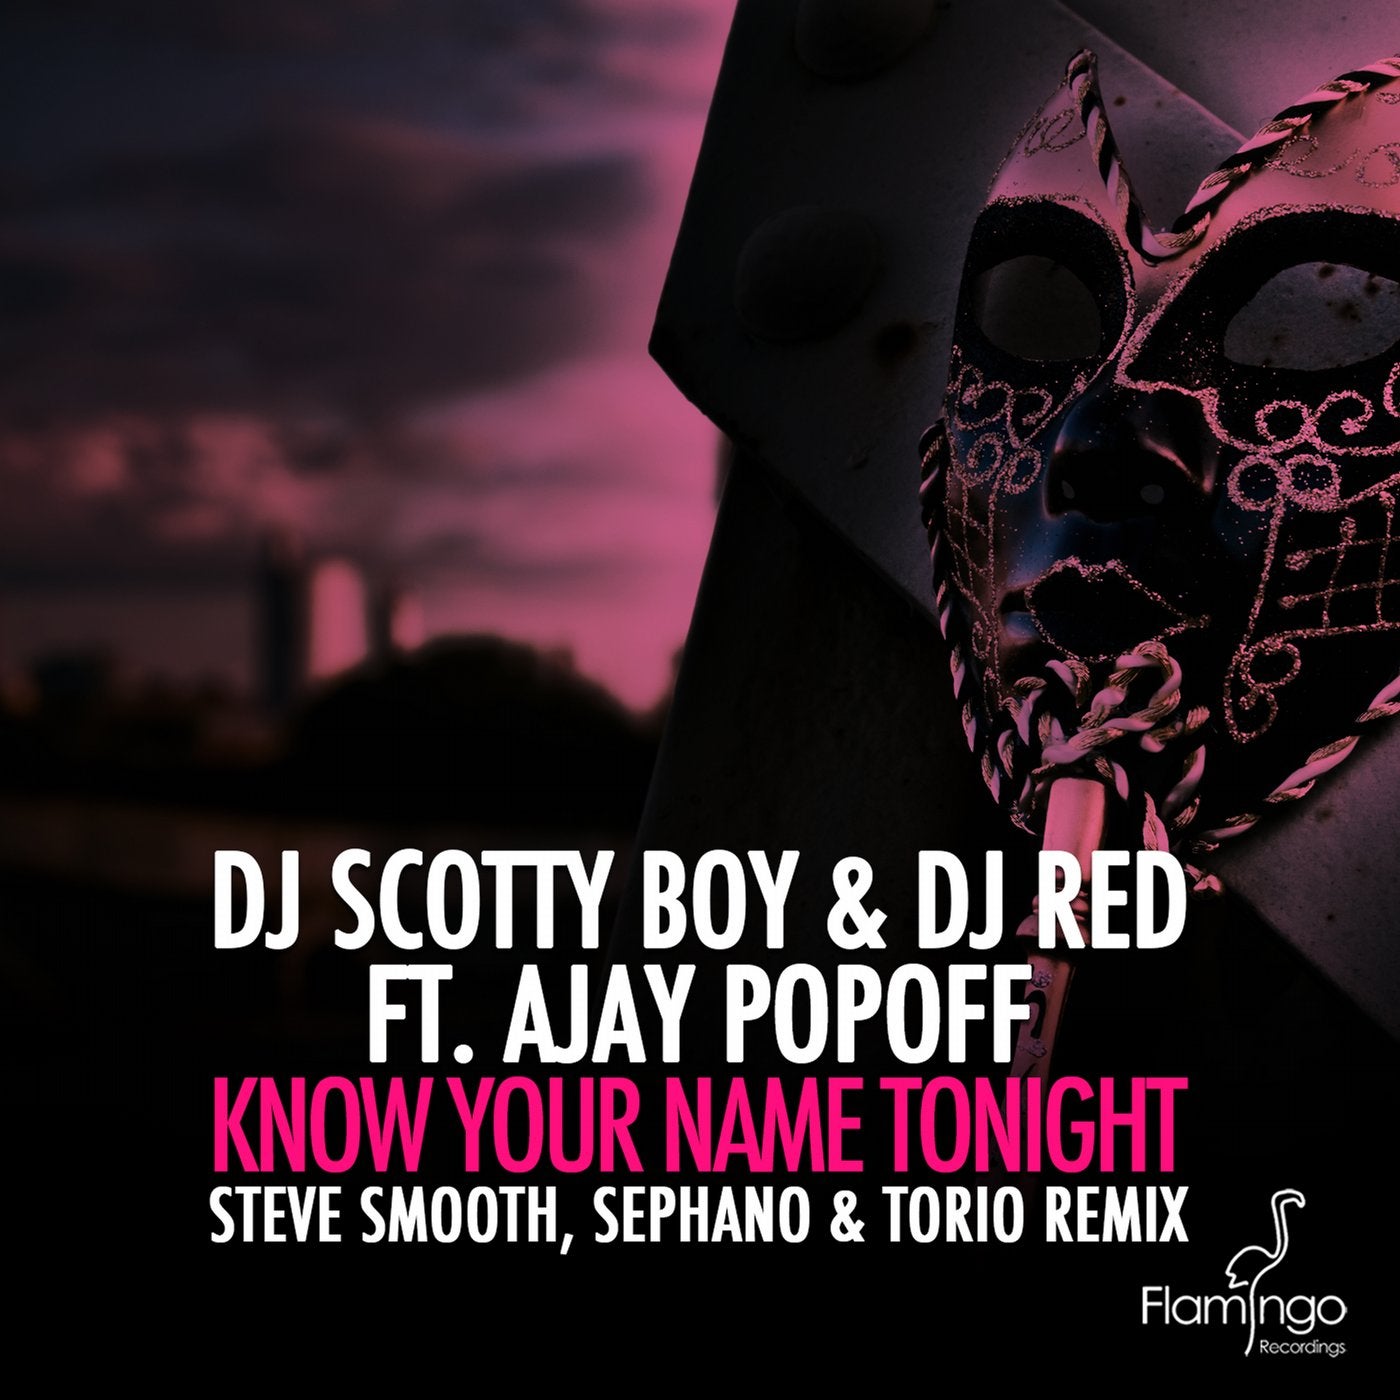 Know Your Name Tonight - Steve Smooth, Sephano & Torio Remix